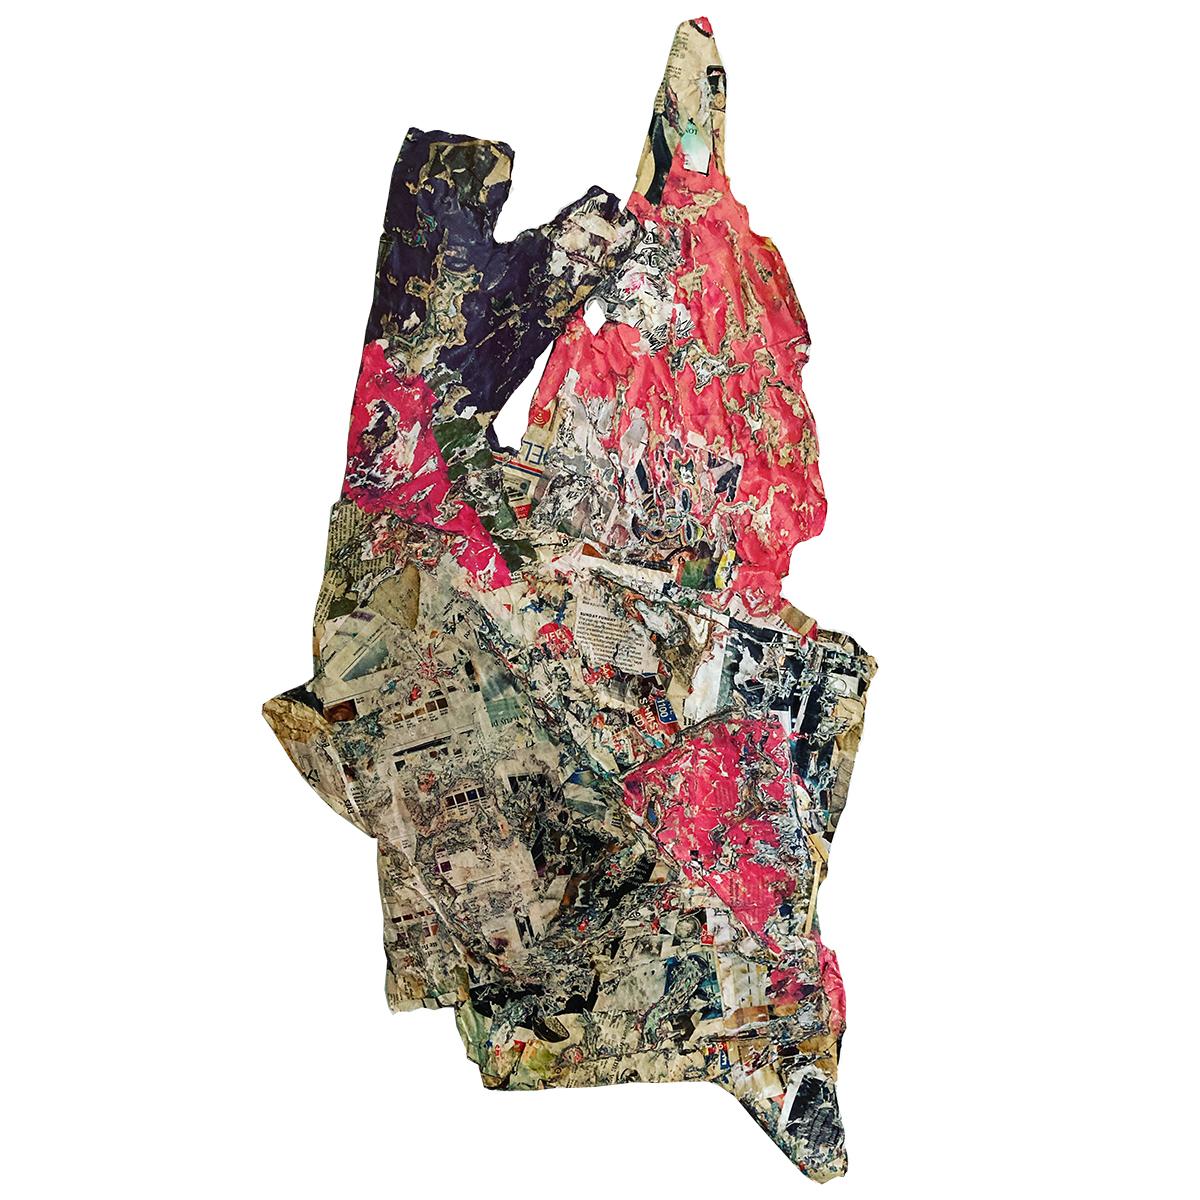 ""High Plains" Rot und Dunkel Lila Abstrakte Mixed Media Skulpturale Collage